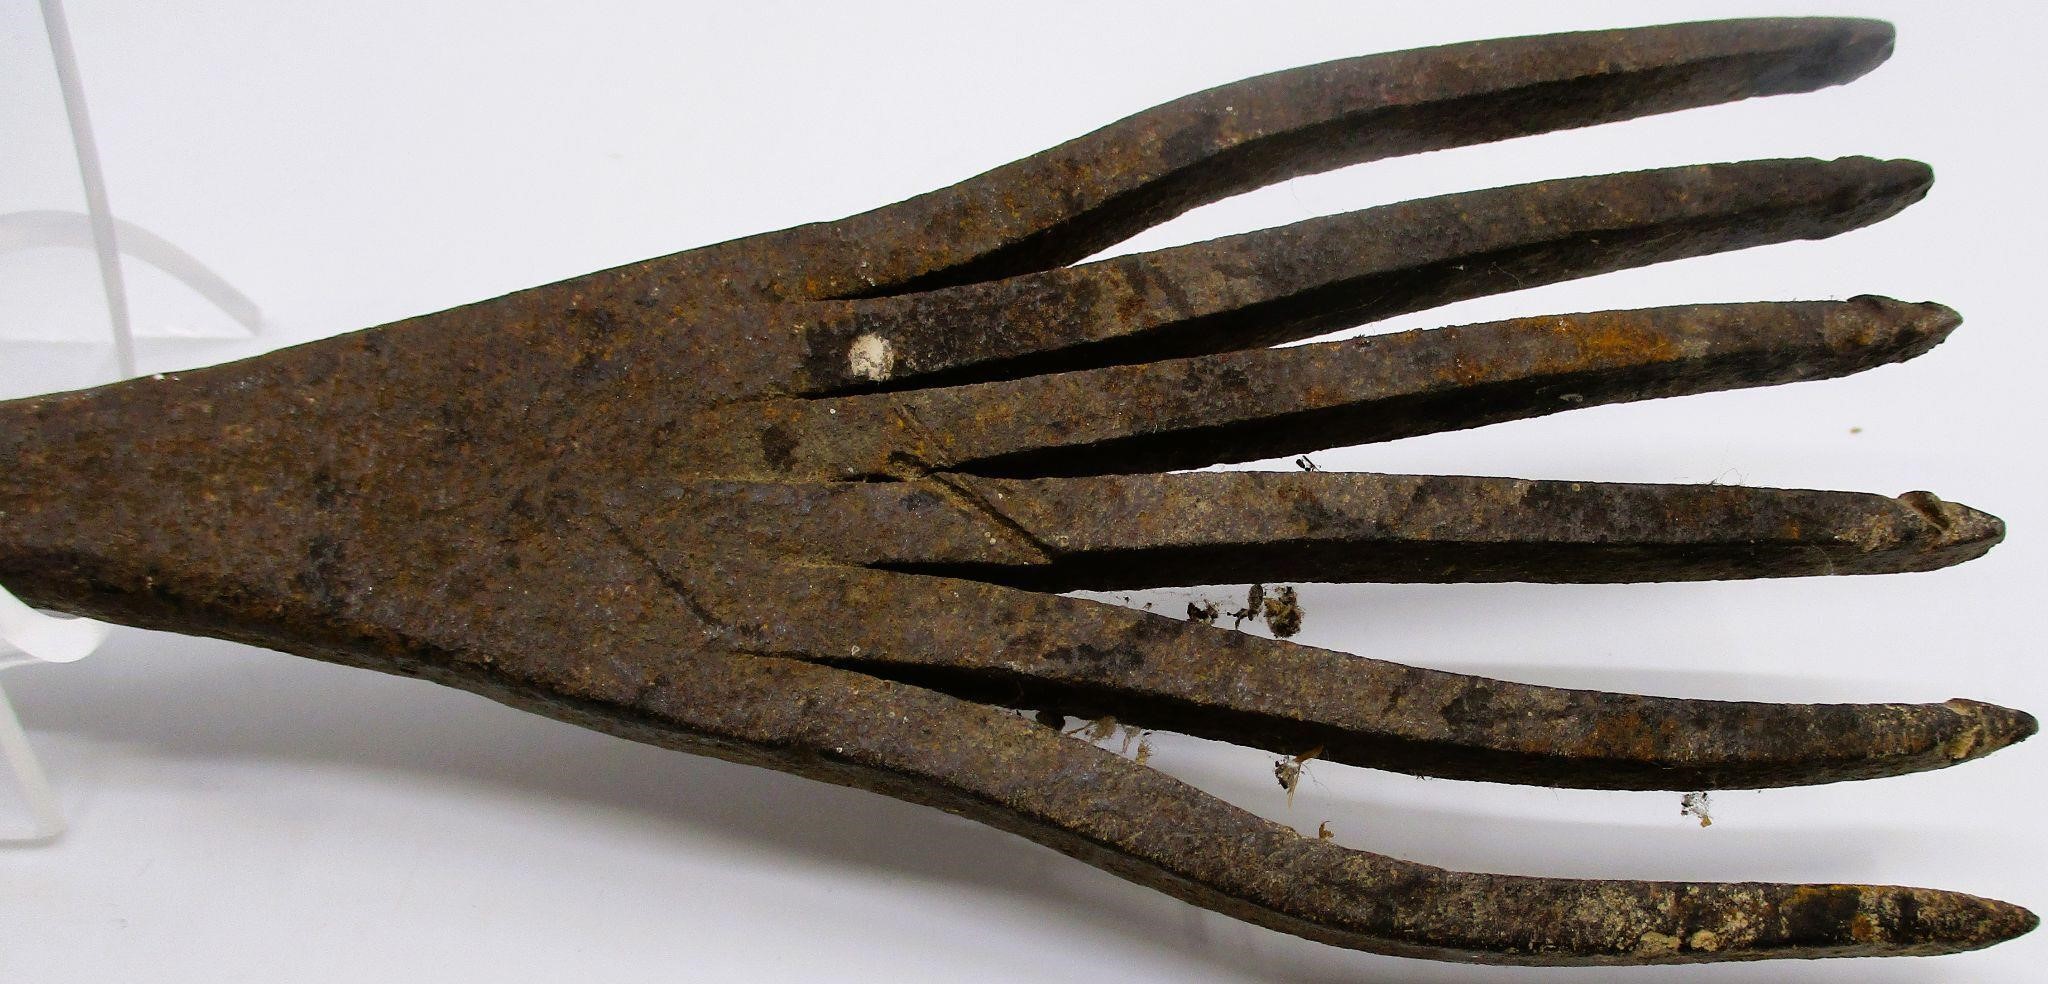 6 Tine Hand Forged Iron Eel Gig